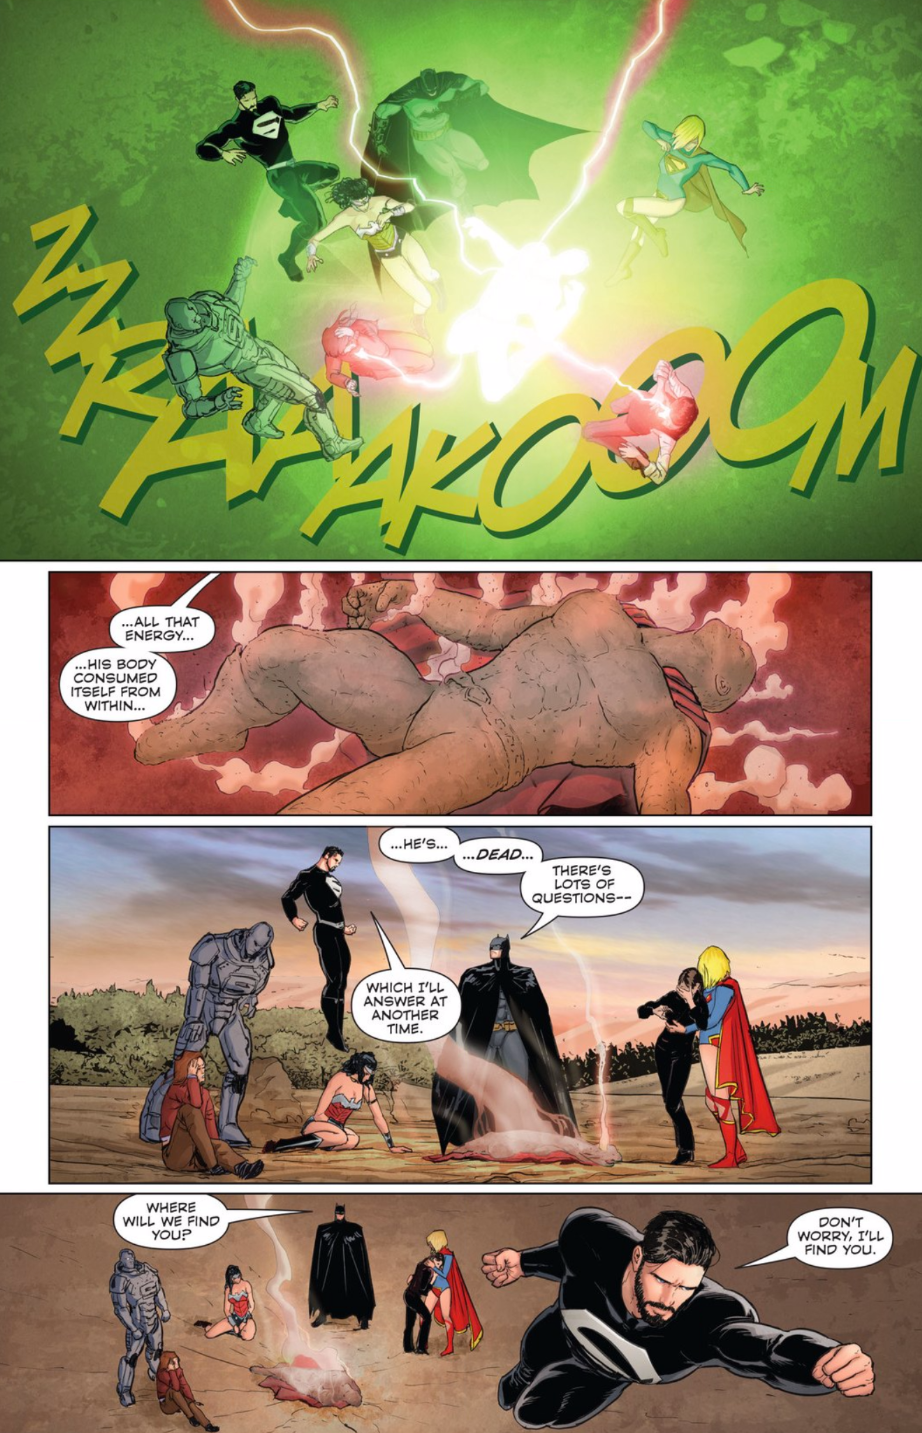 42 - [DC Comics] Superman: Discusión General - Página 10 Pmxp5wkhym7m6rtysmbn